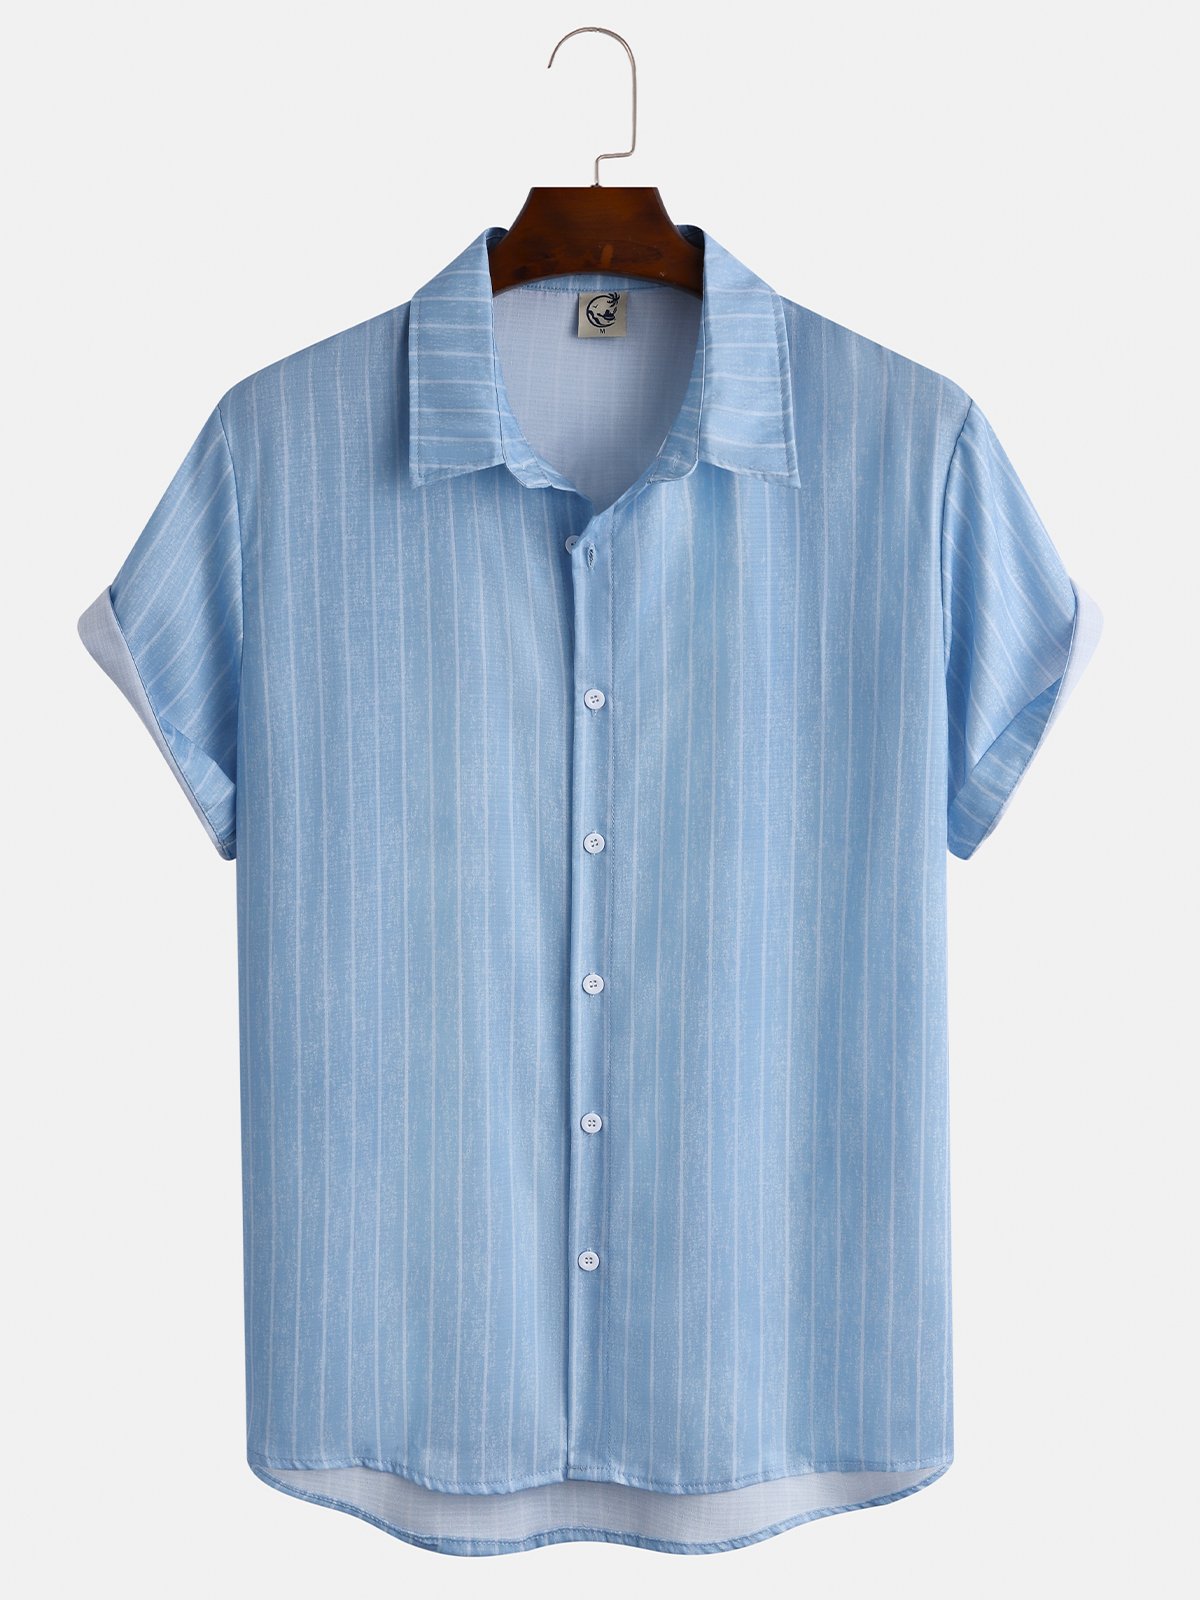 Mens Basic Striped Solid Short Sleeve Shirt